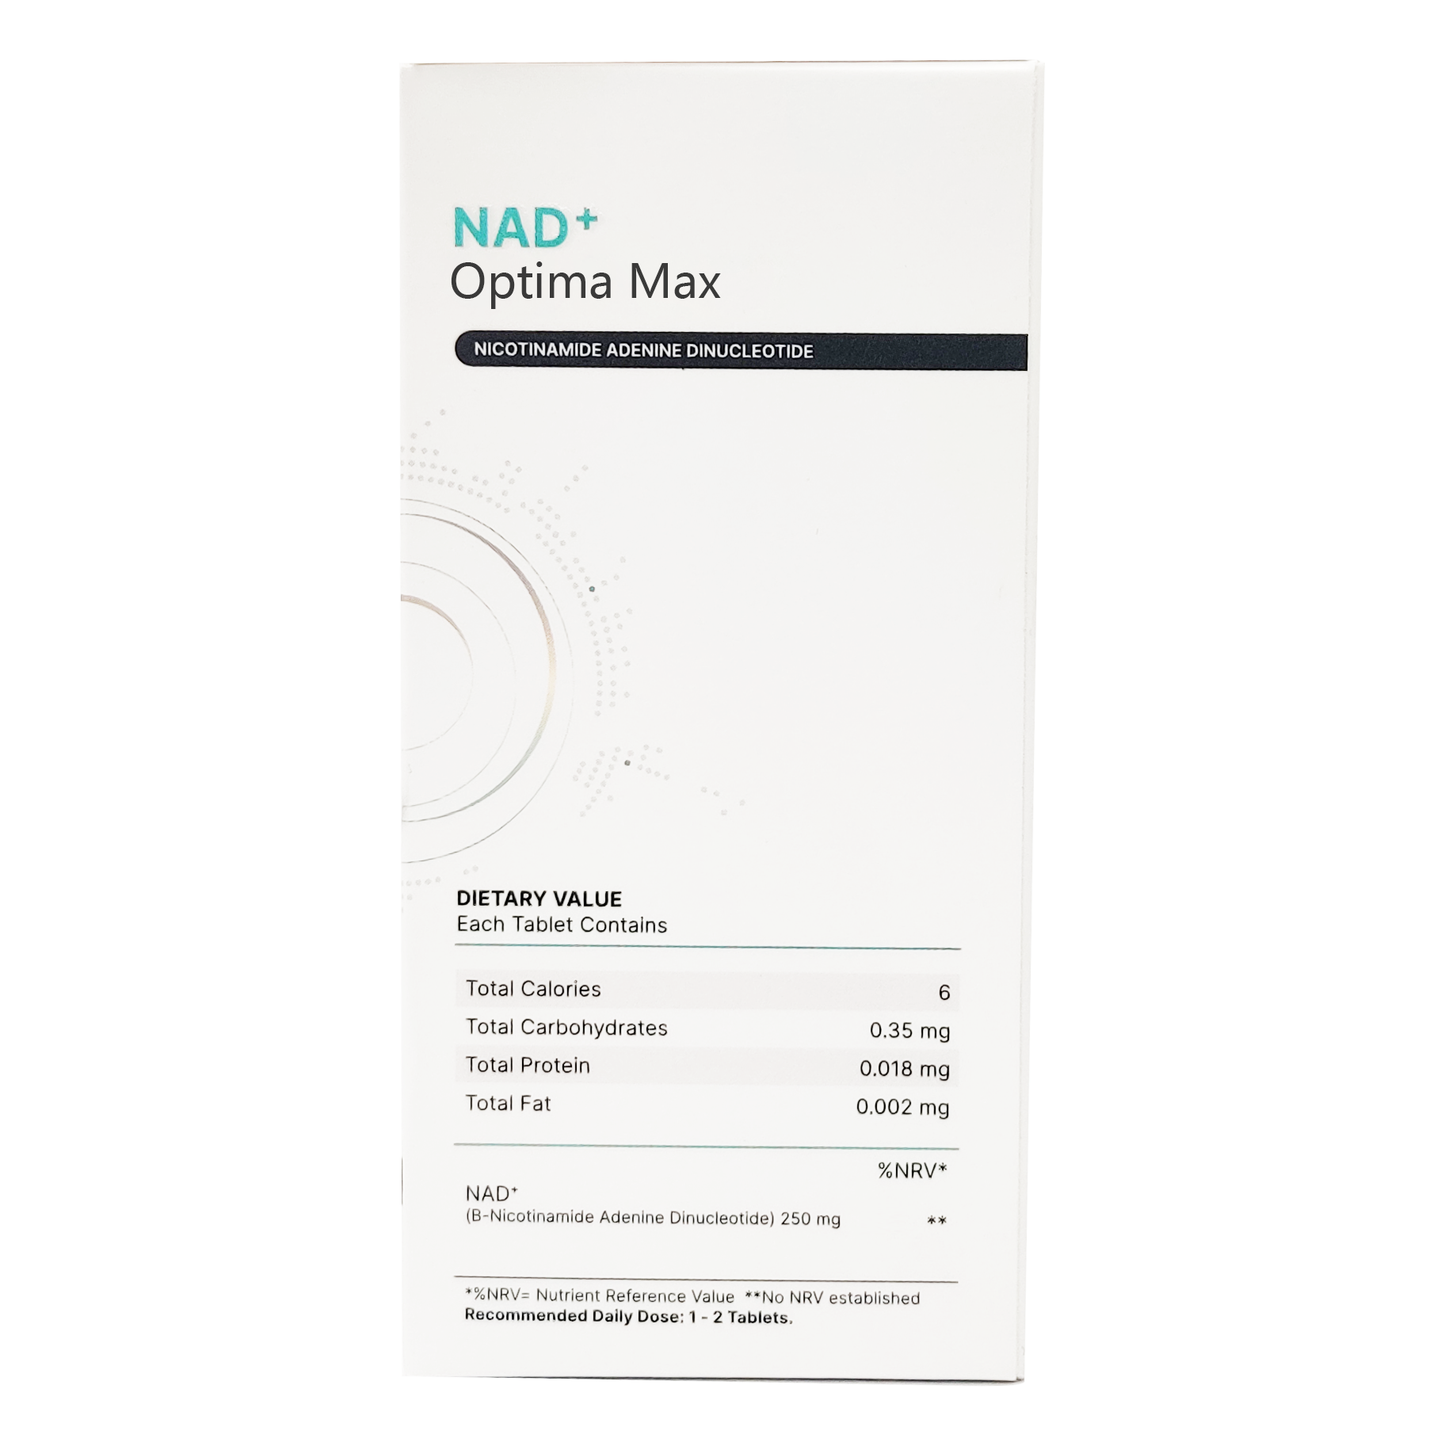 Enhanced Optima Max 30s (1 Month Supply)